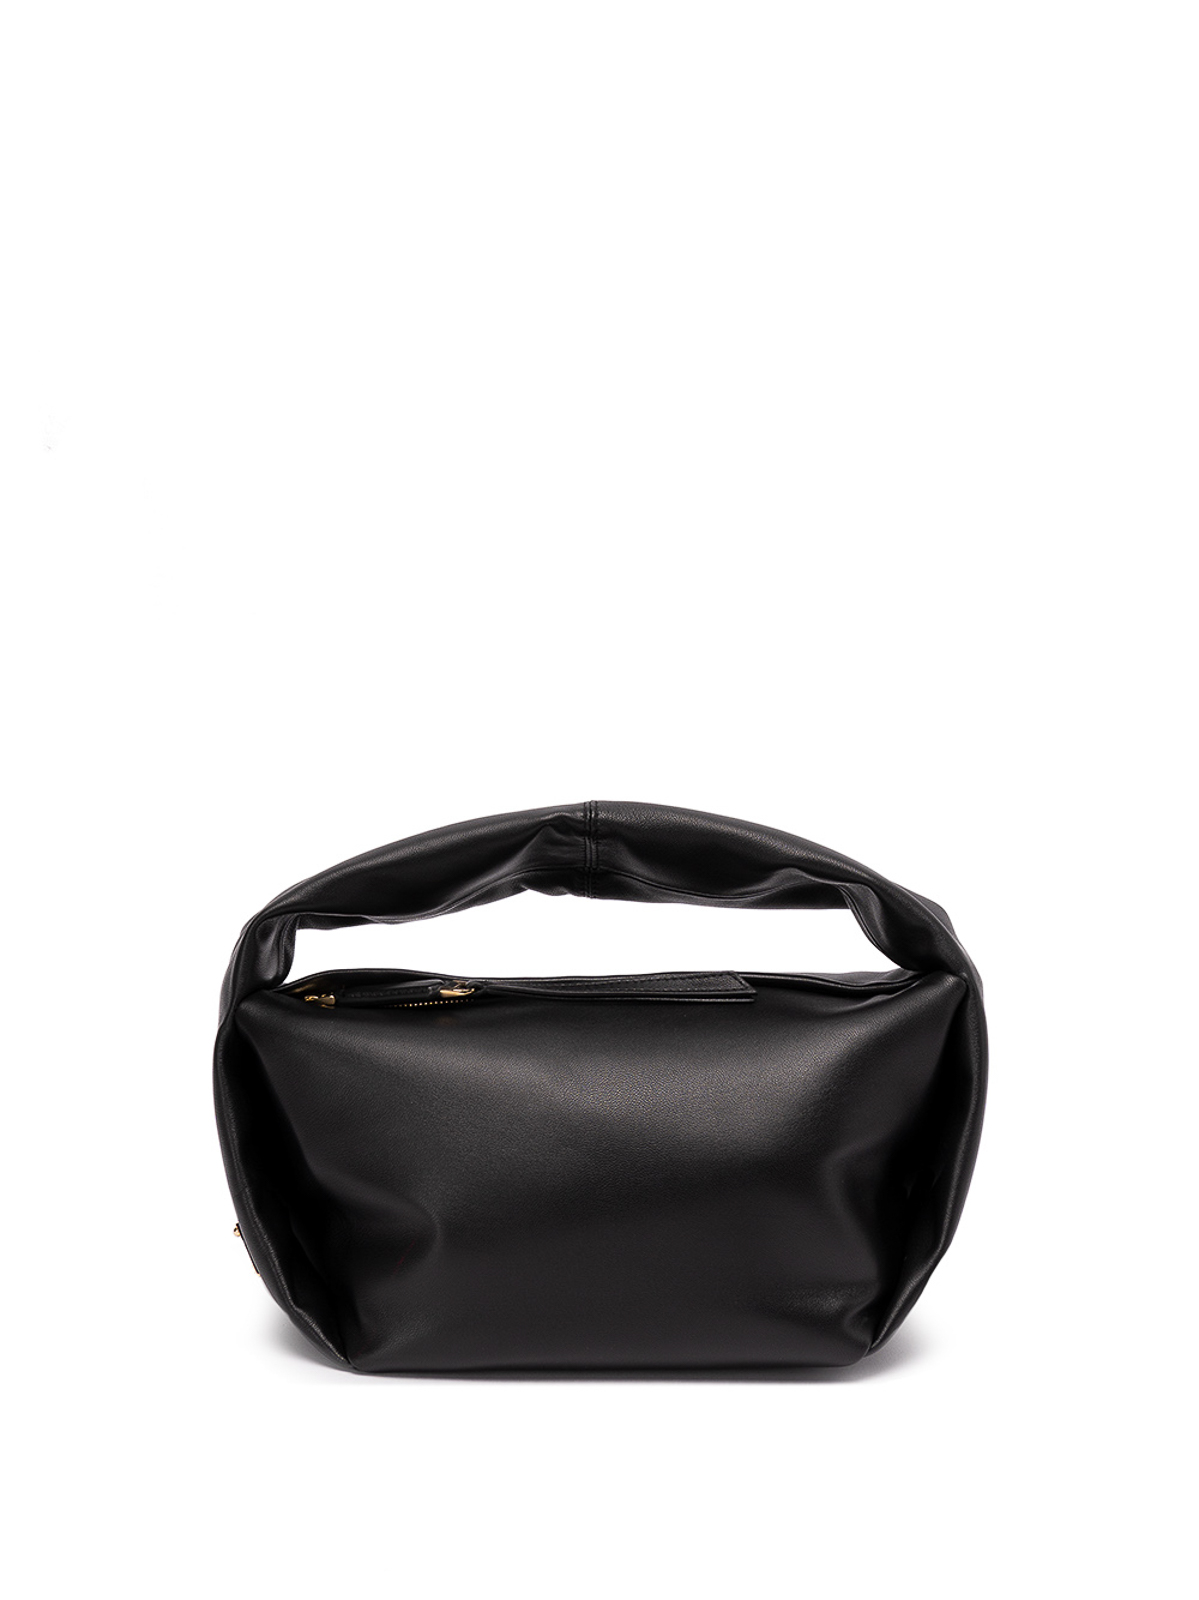 Dolce & Gabbana Runway Handbag In Black